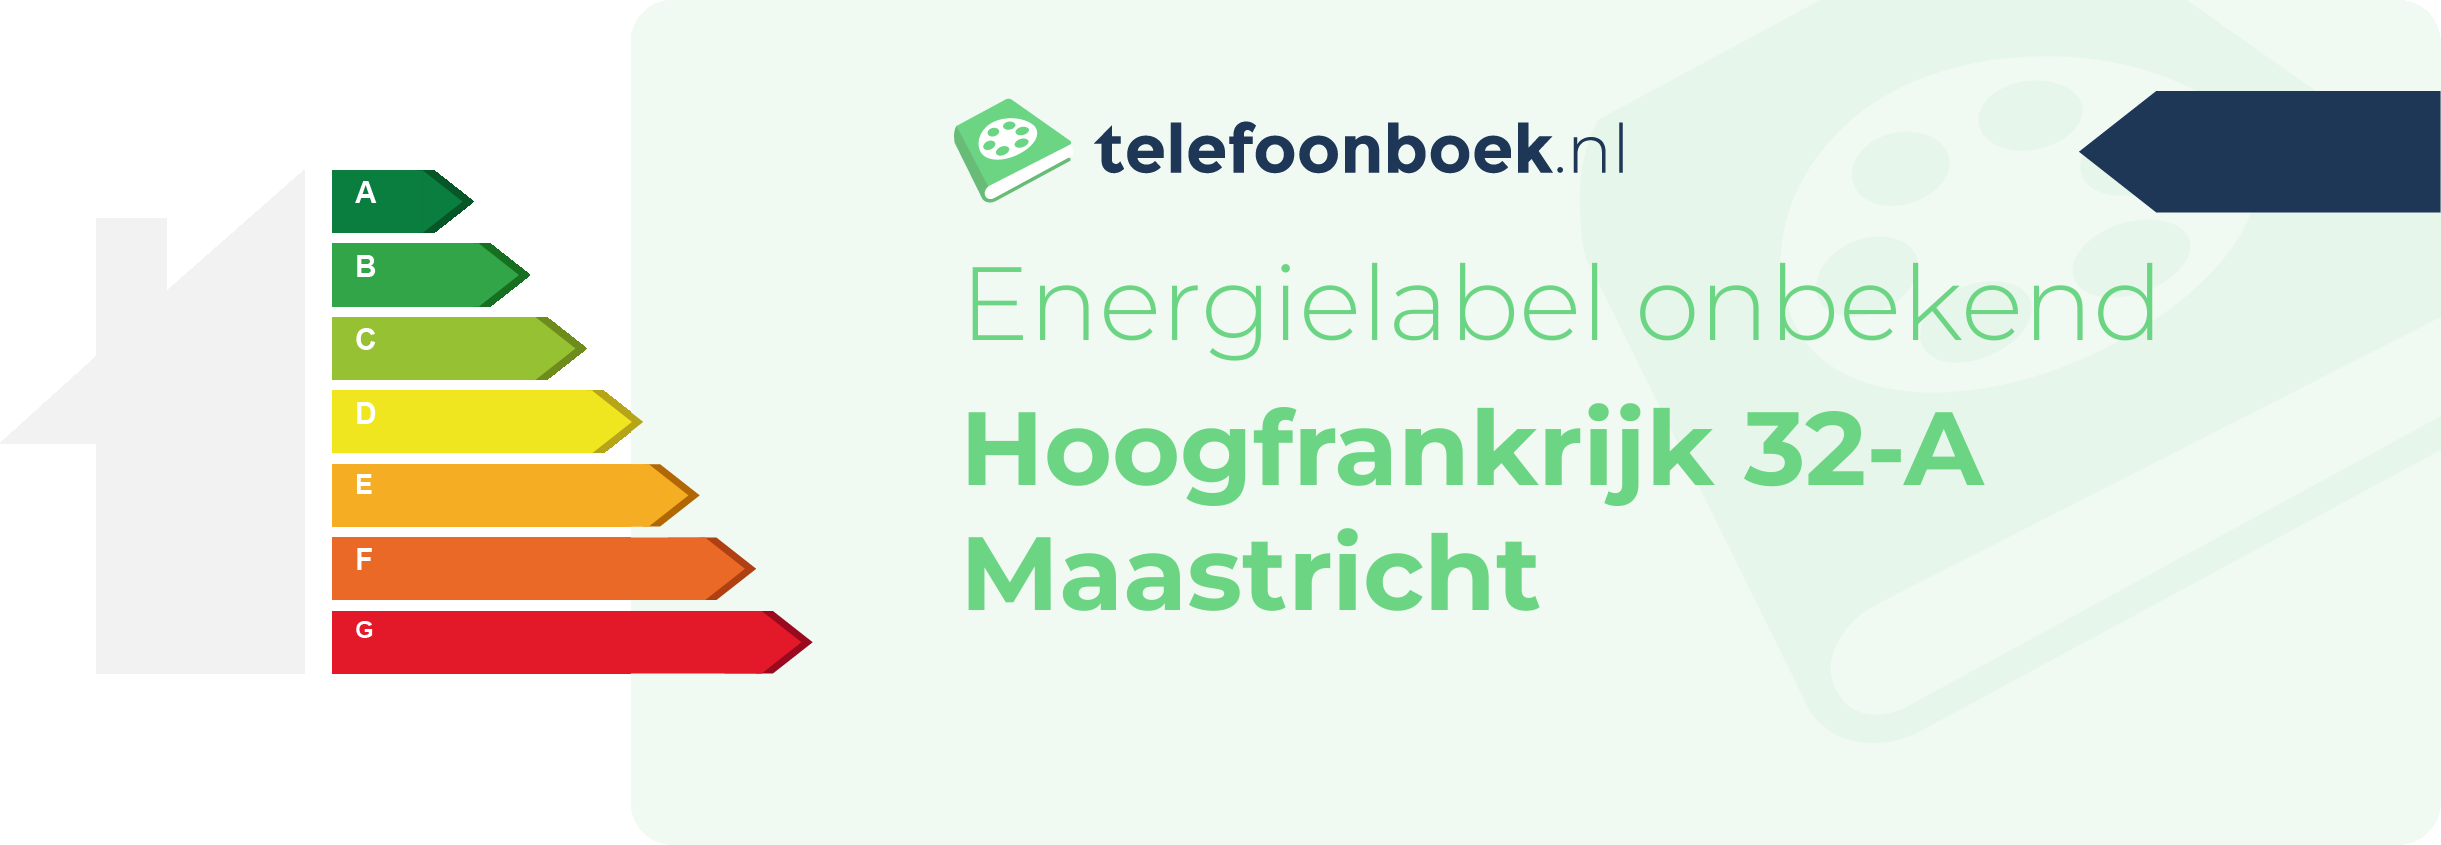 Energielabel Hoogfrankrijk 32-A Maastricht